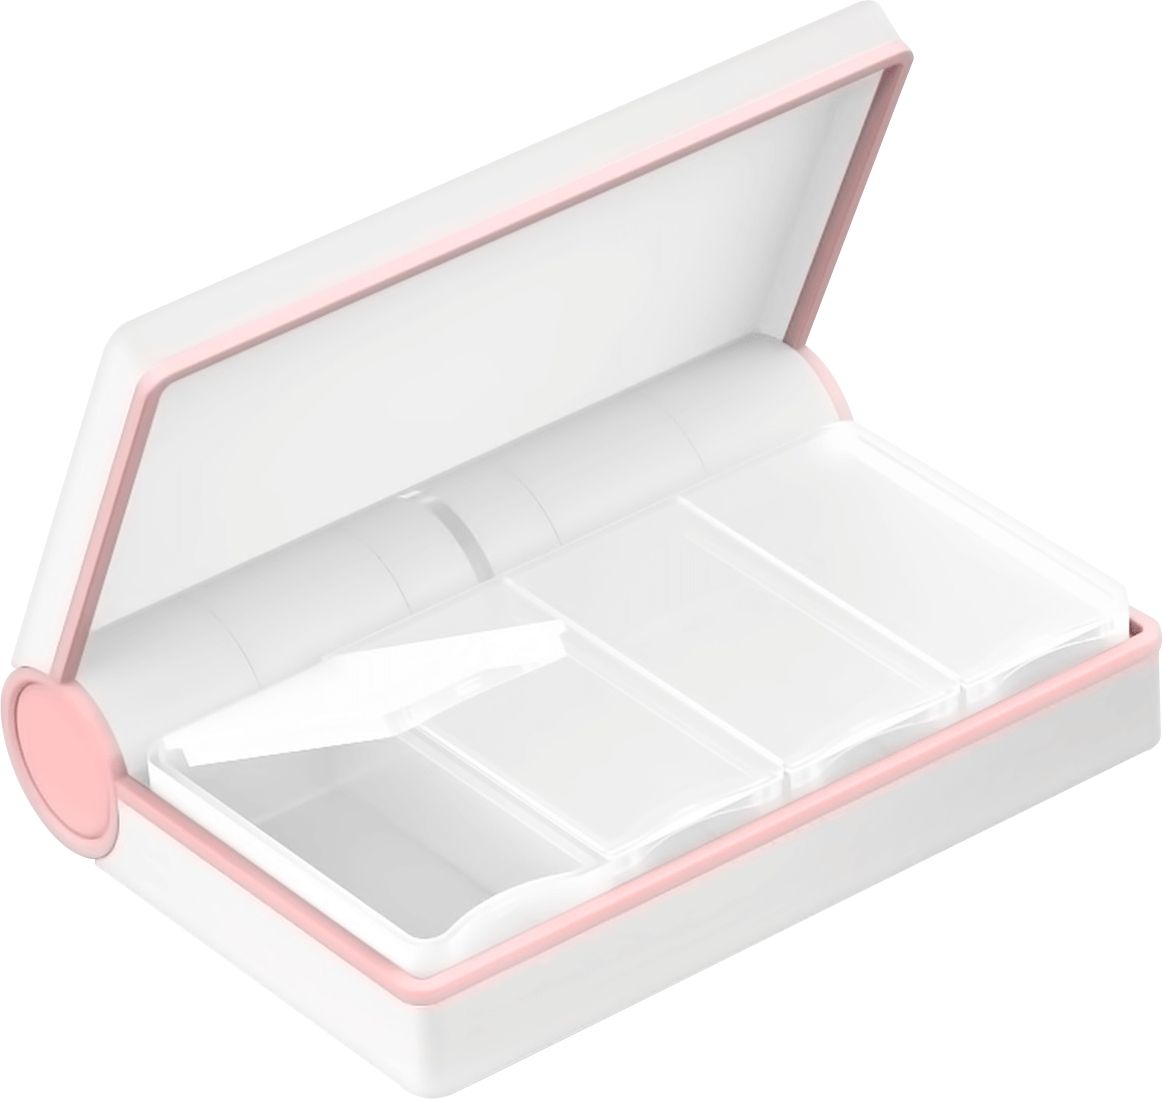 CMI Health - Memo Box Smart Pillbox - Pink